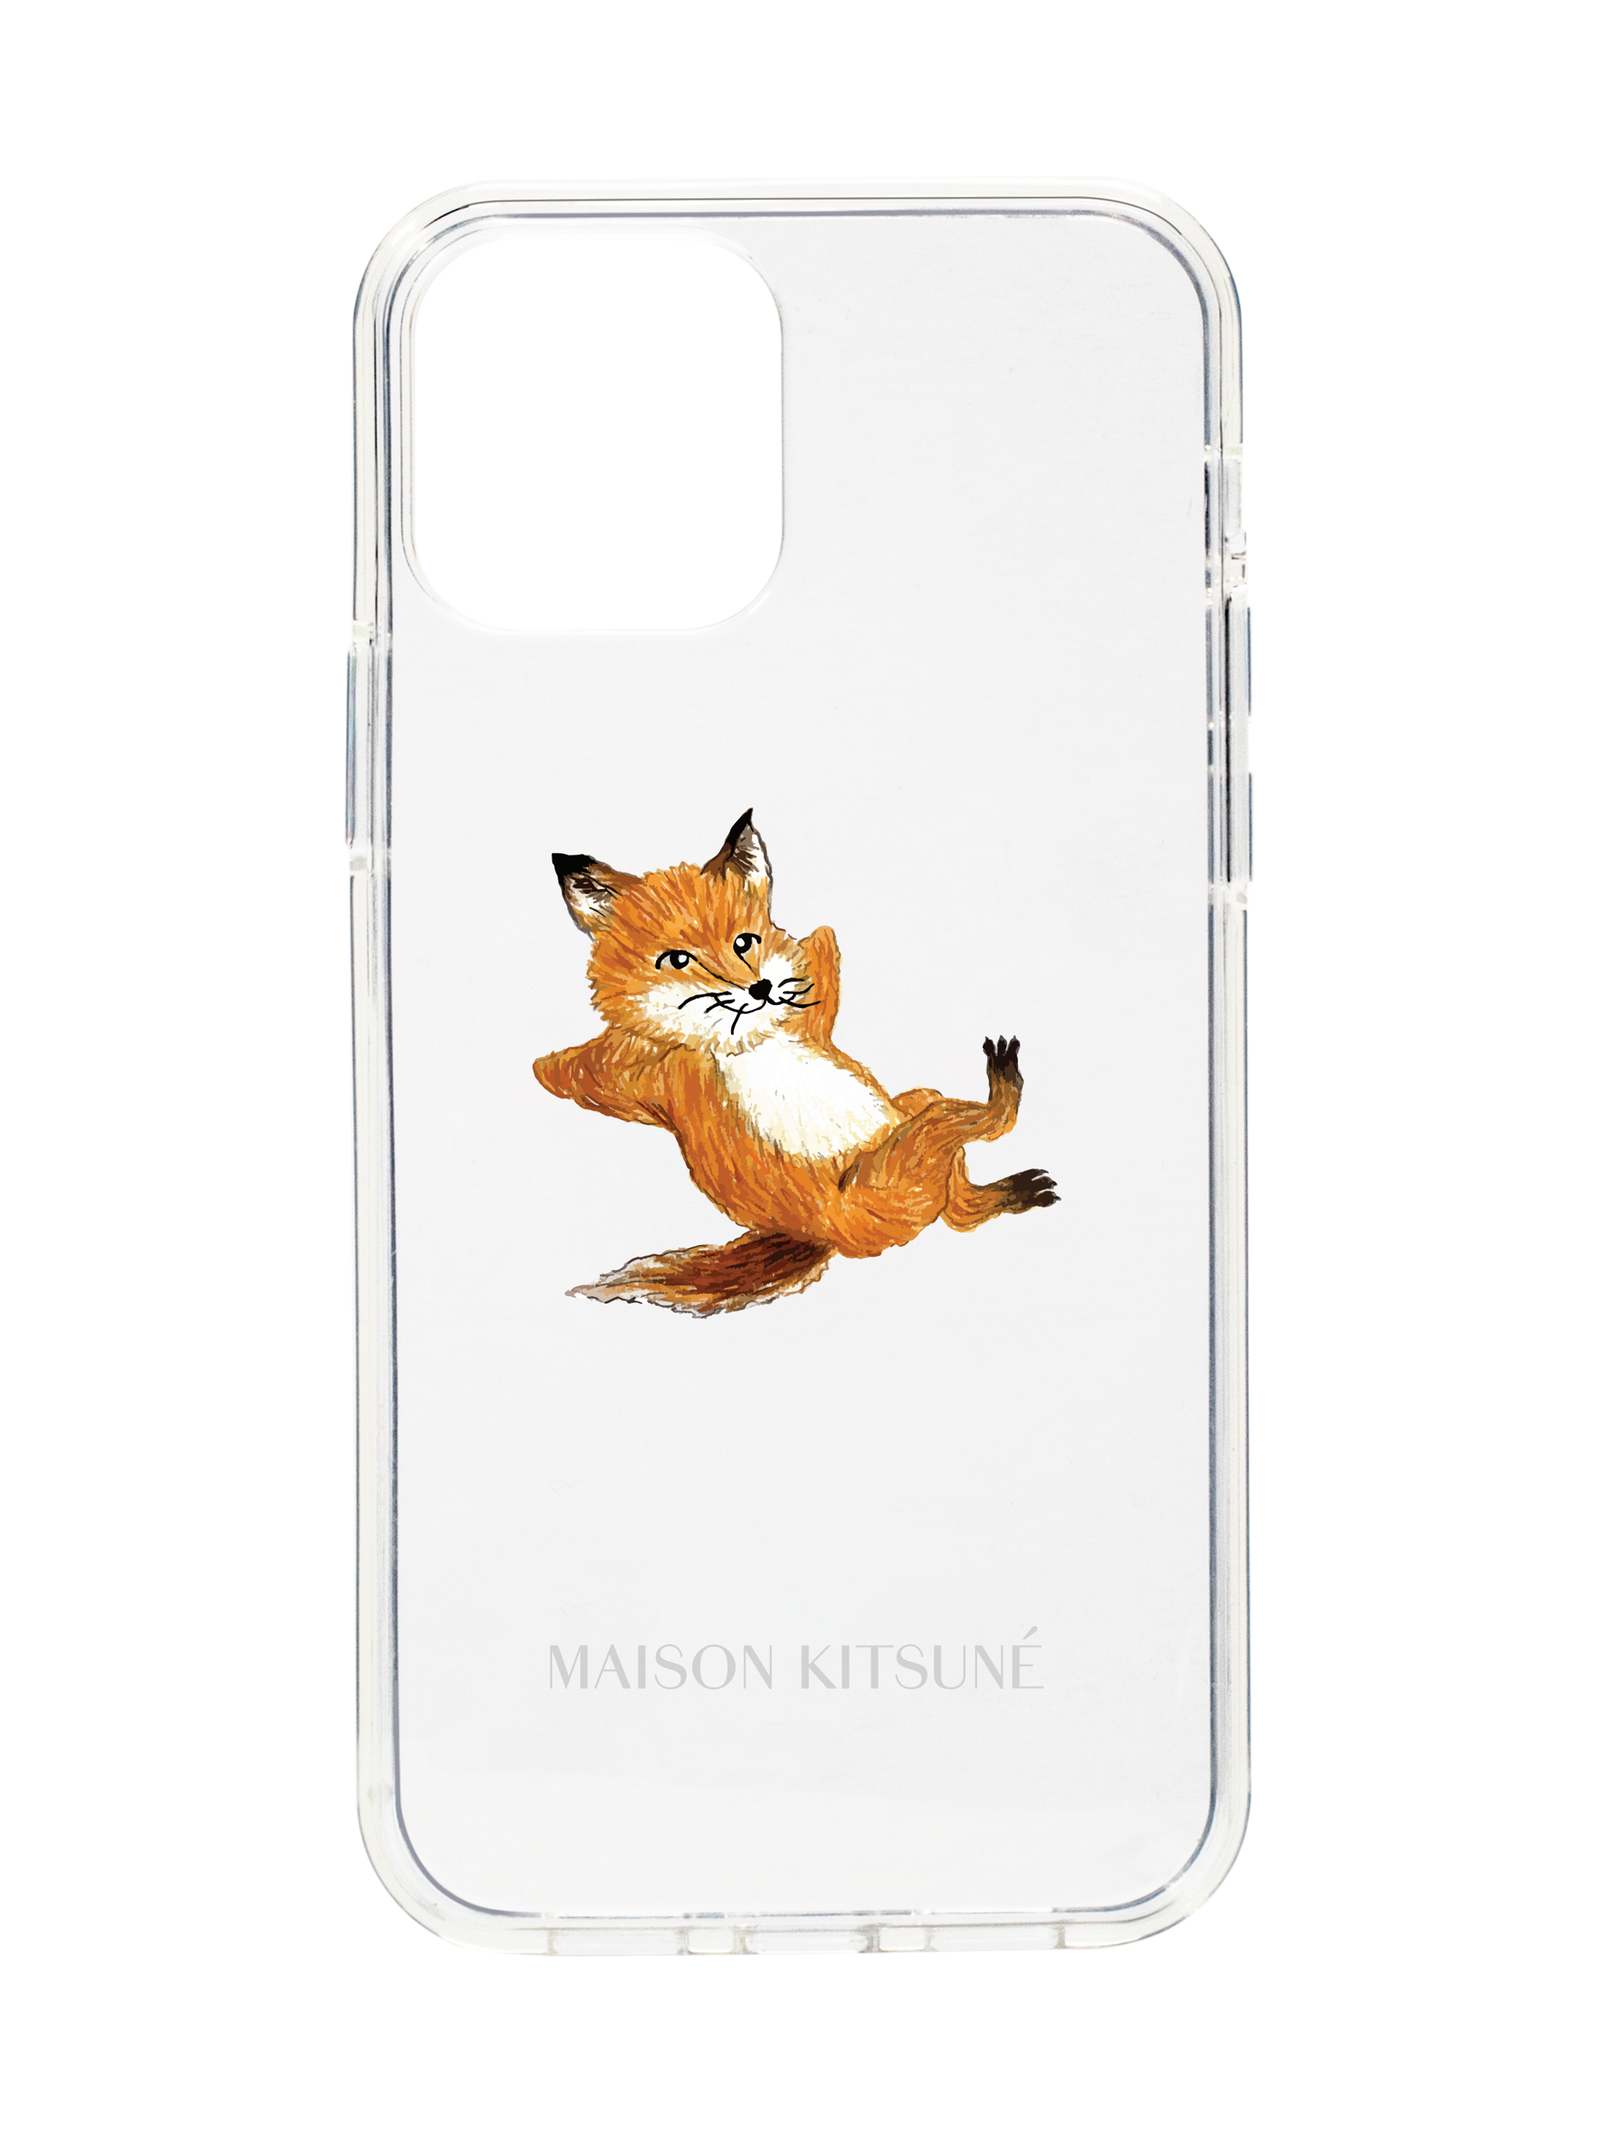 MAISON KITSUNÉ - 【IPHONE 12/12PRO】対応ケース - CHILLAX FOX CASE 